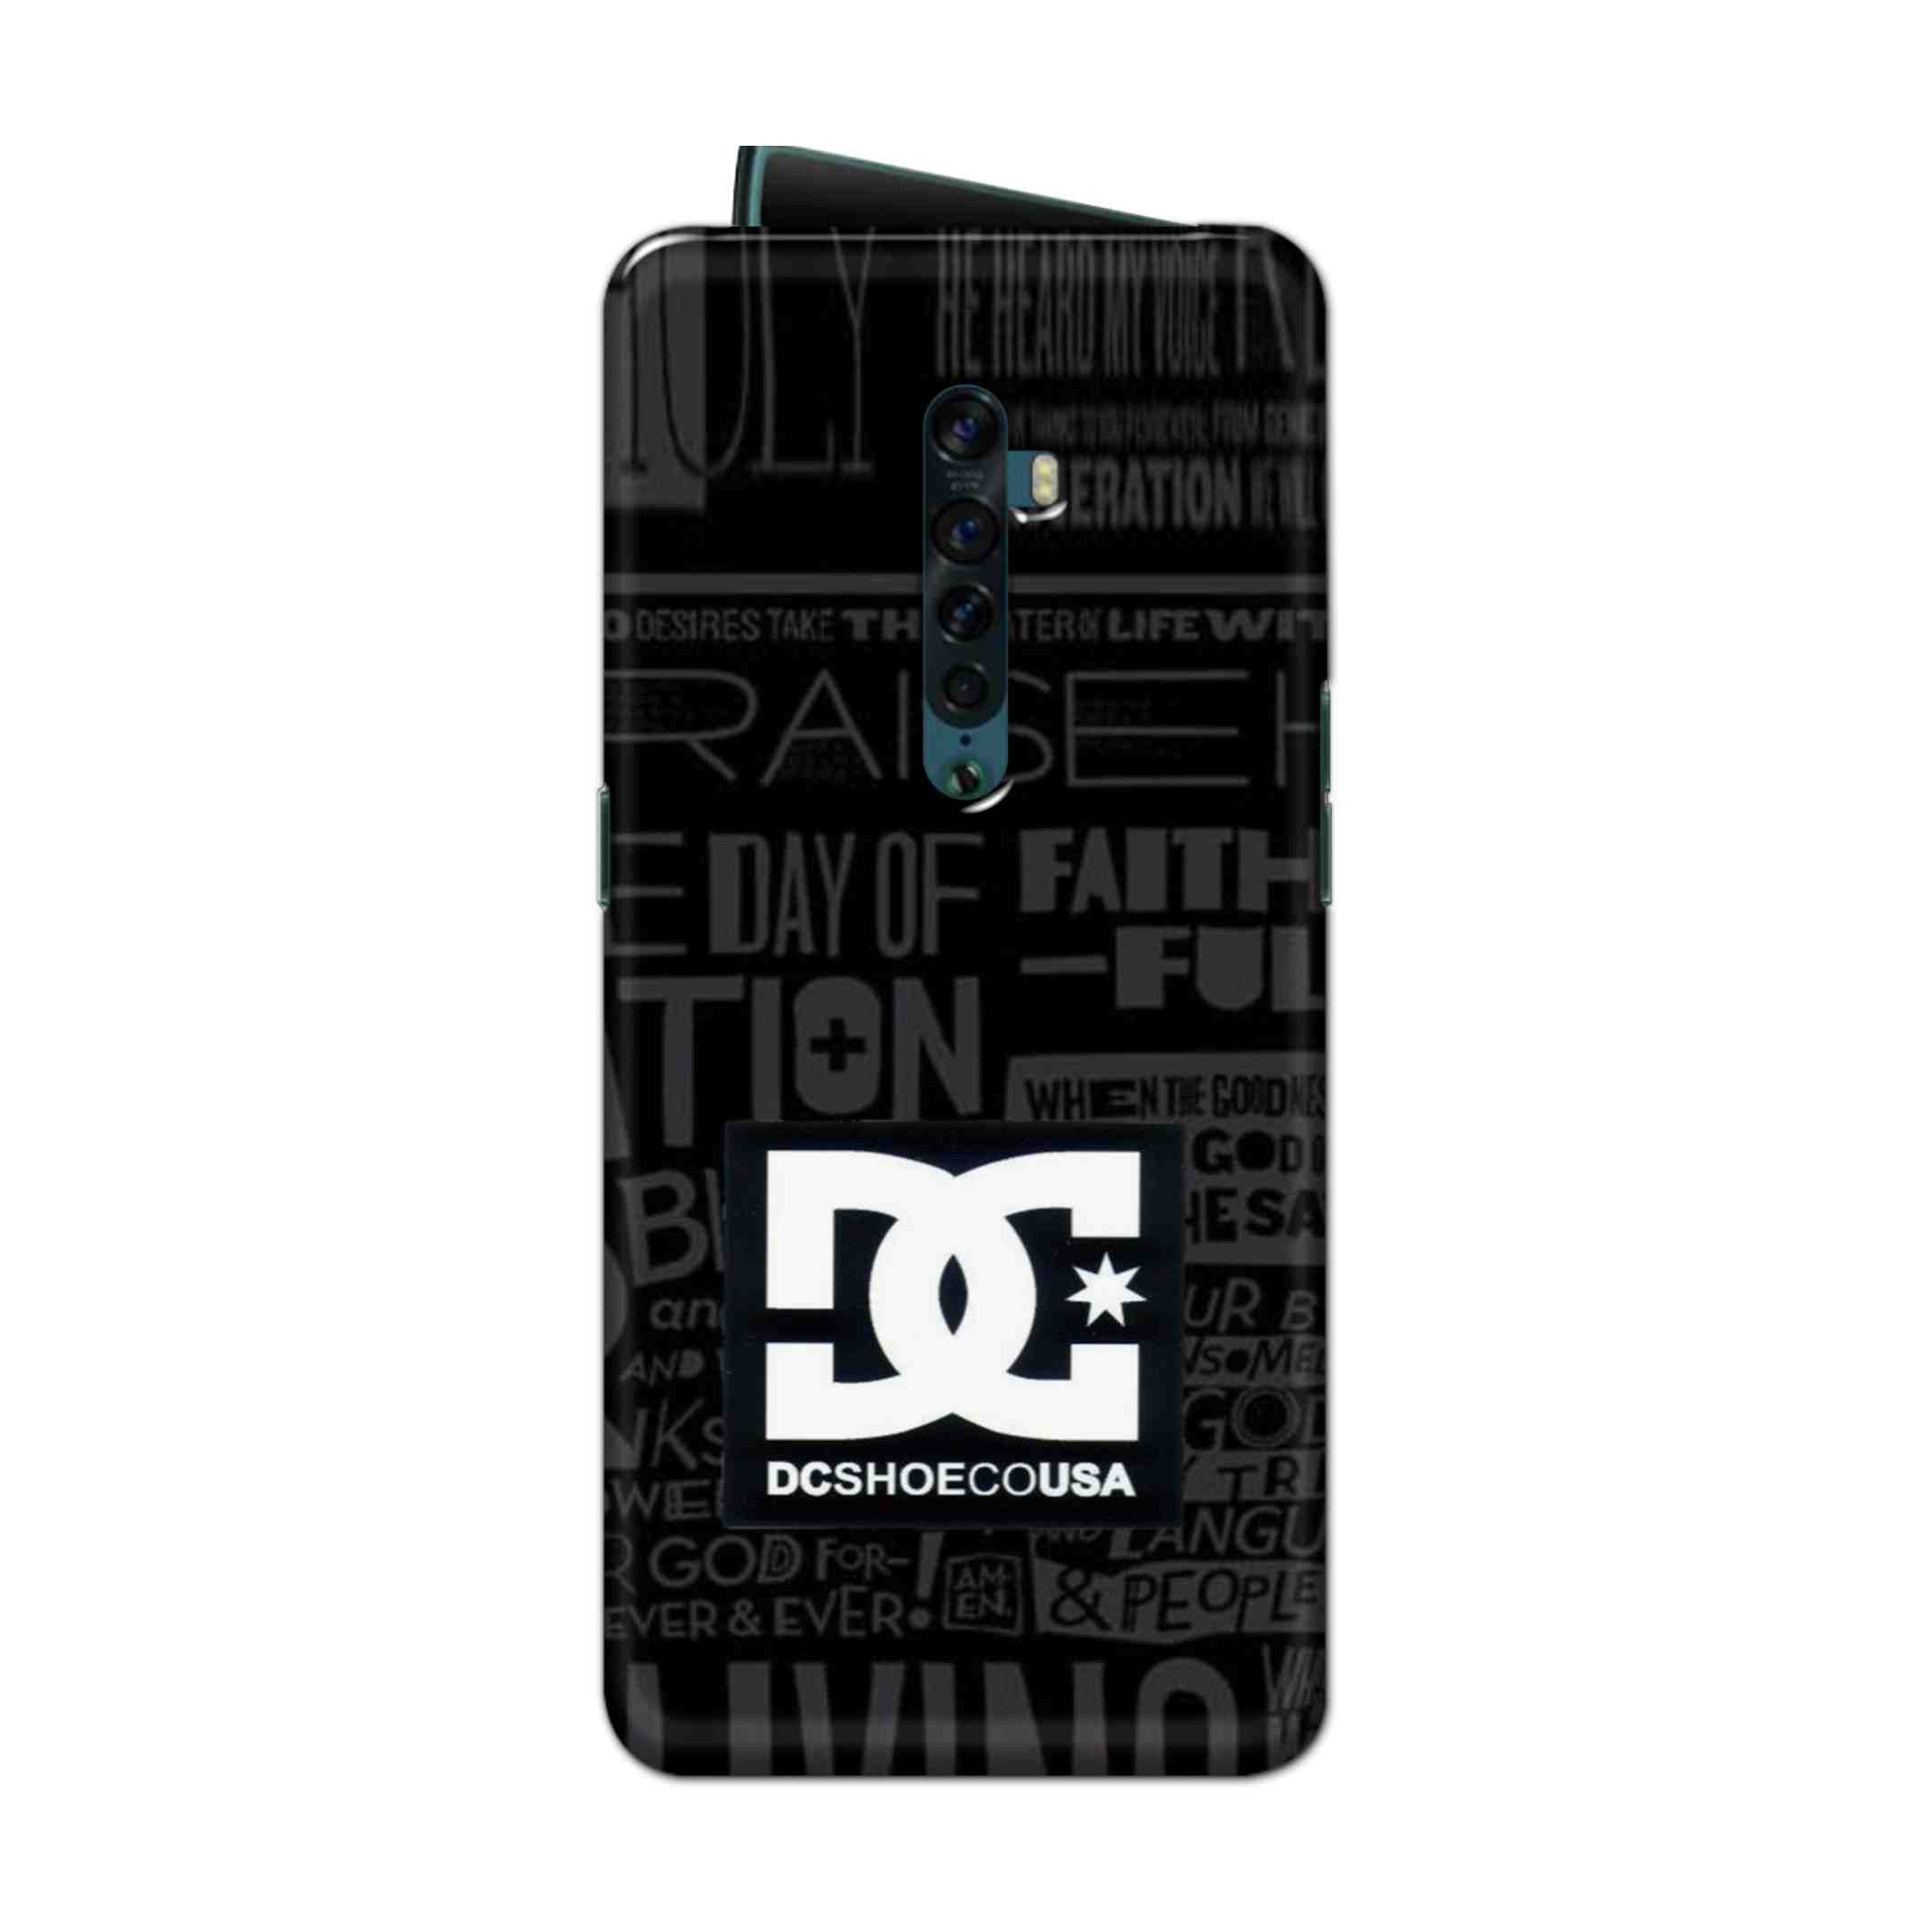 Buy Dc Shoecousa Hard Back Mobile Phone Case Cover For Oppo Reno 2 Online